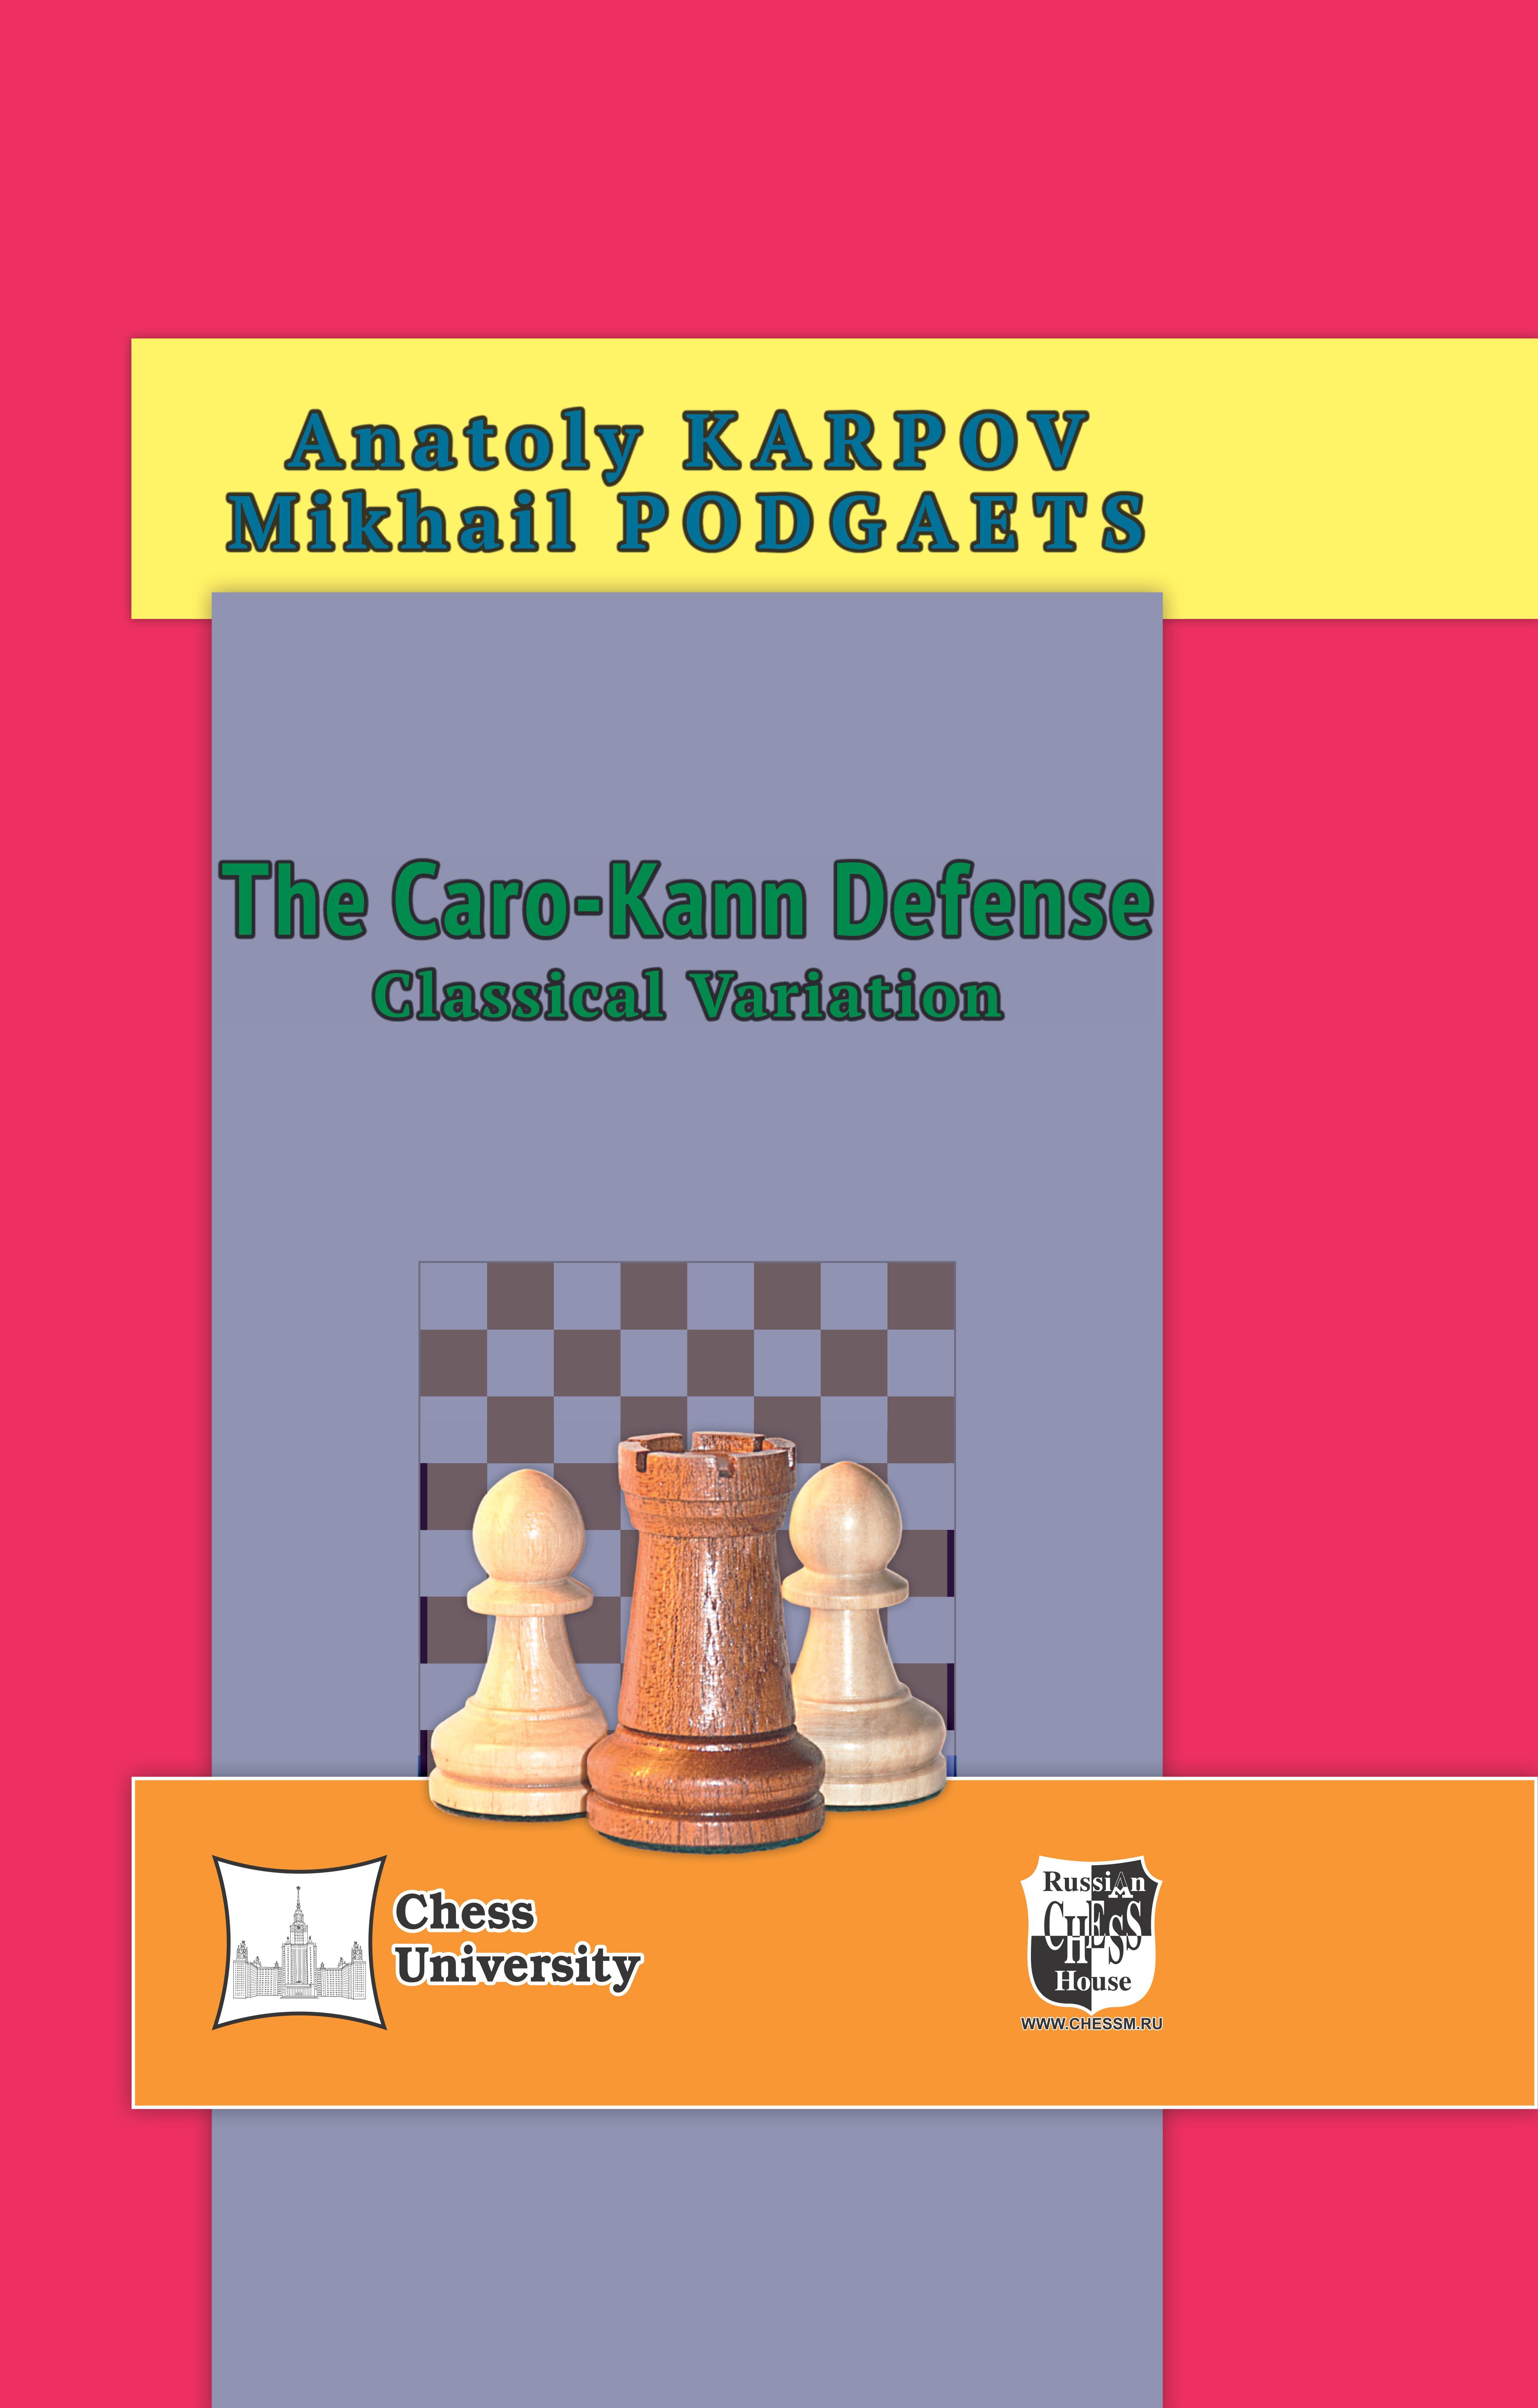 File:Classical Variation of the Caro-Kann Defense.jpg - Wikimedia Commons